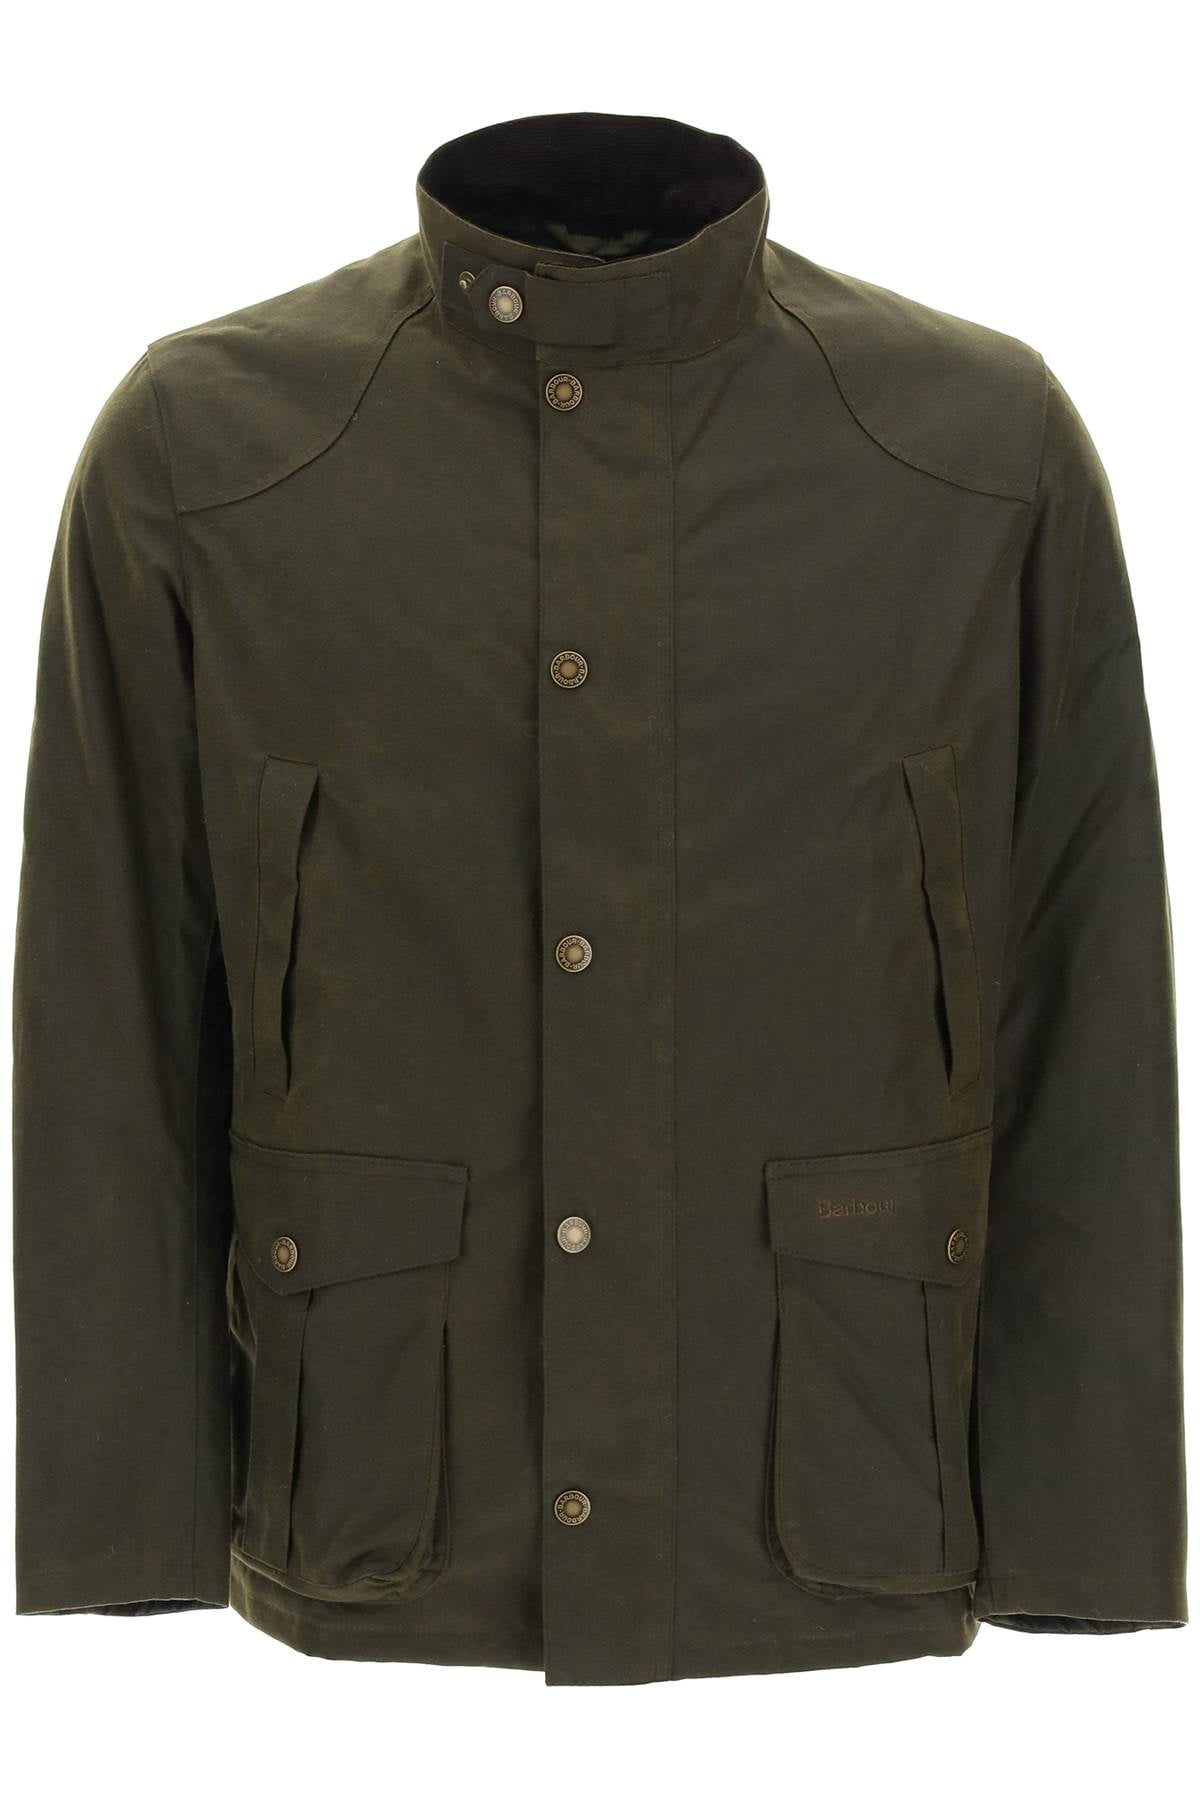 Barbour leeward jacket in waxed cotton - Walmart.com